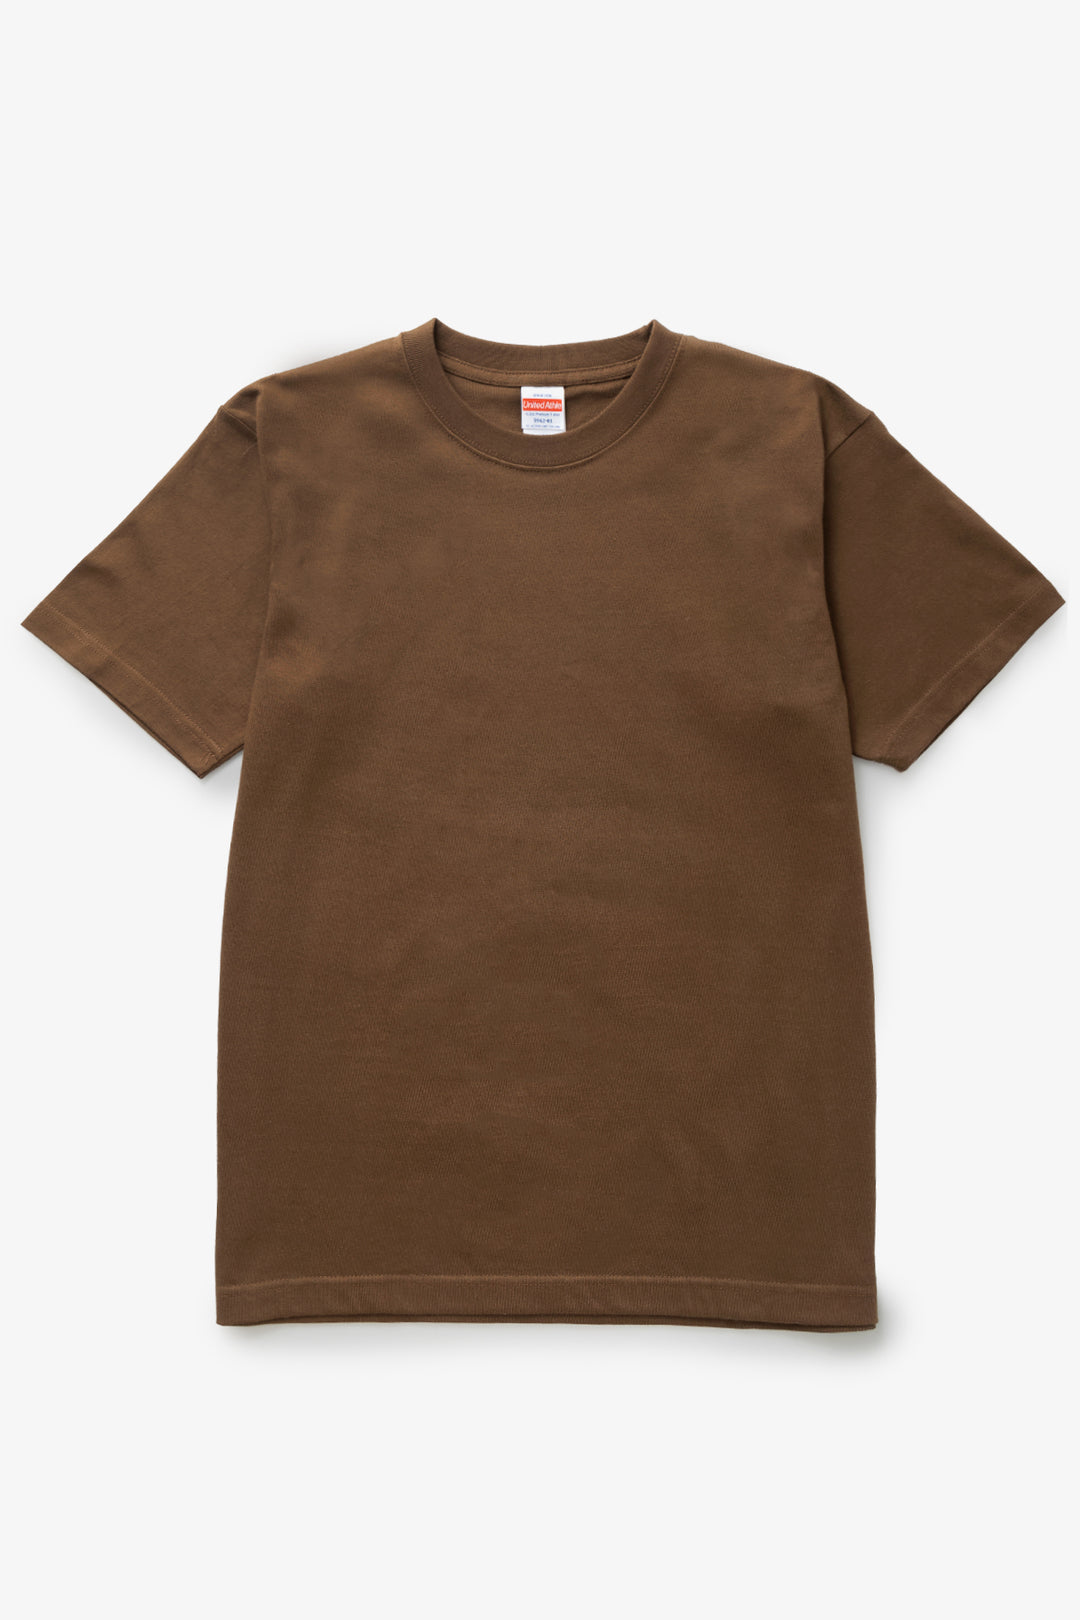 United Athle - 5942 6.2oz Premium T-Shirt - Brown